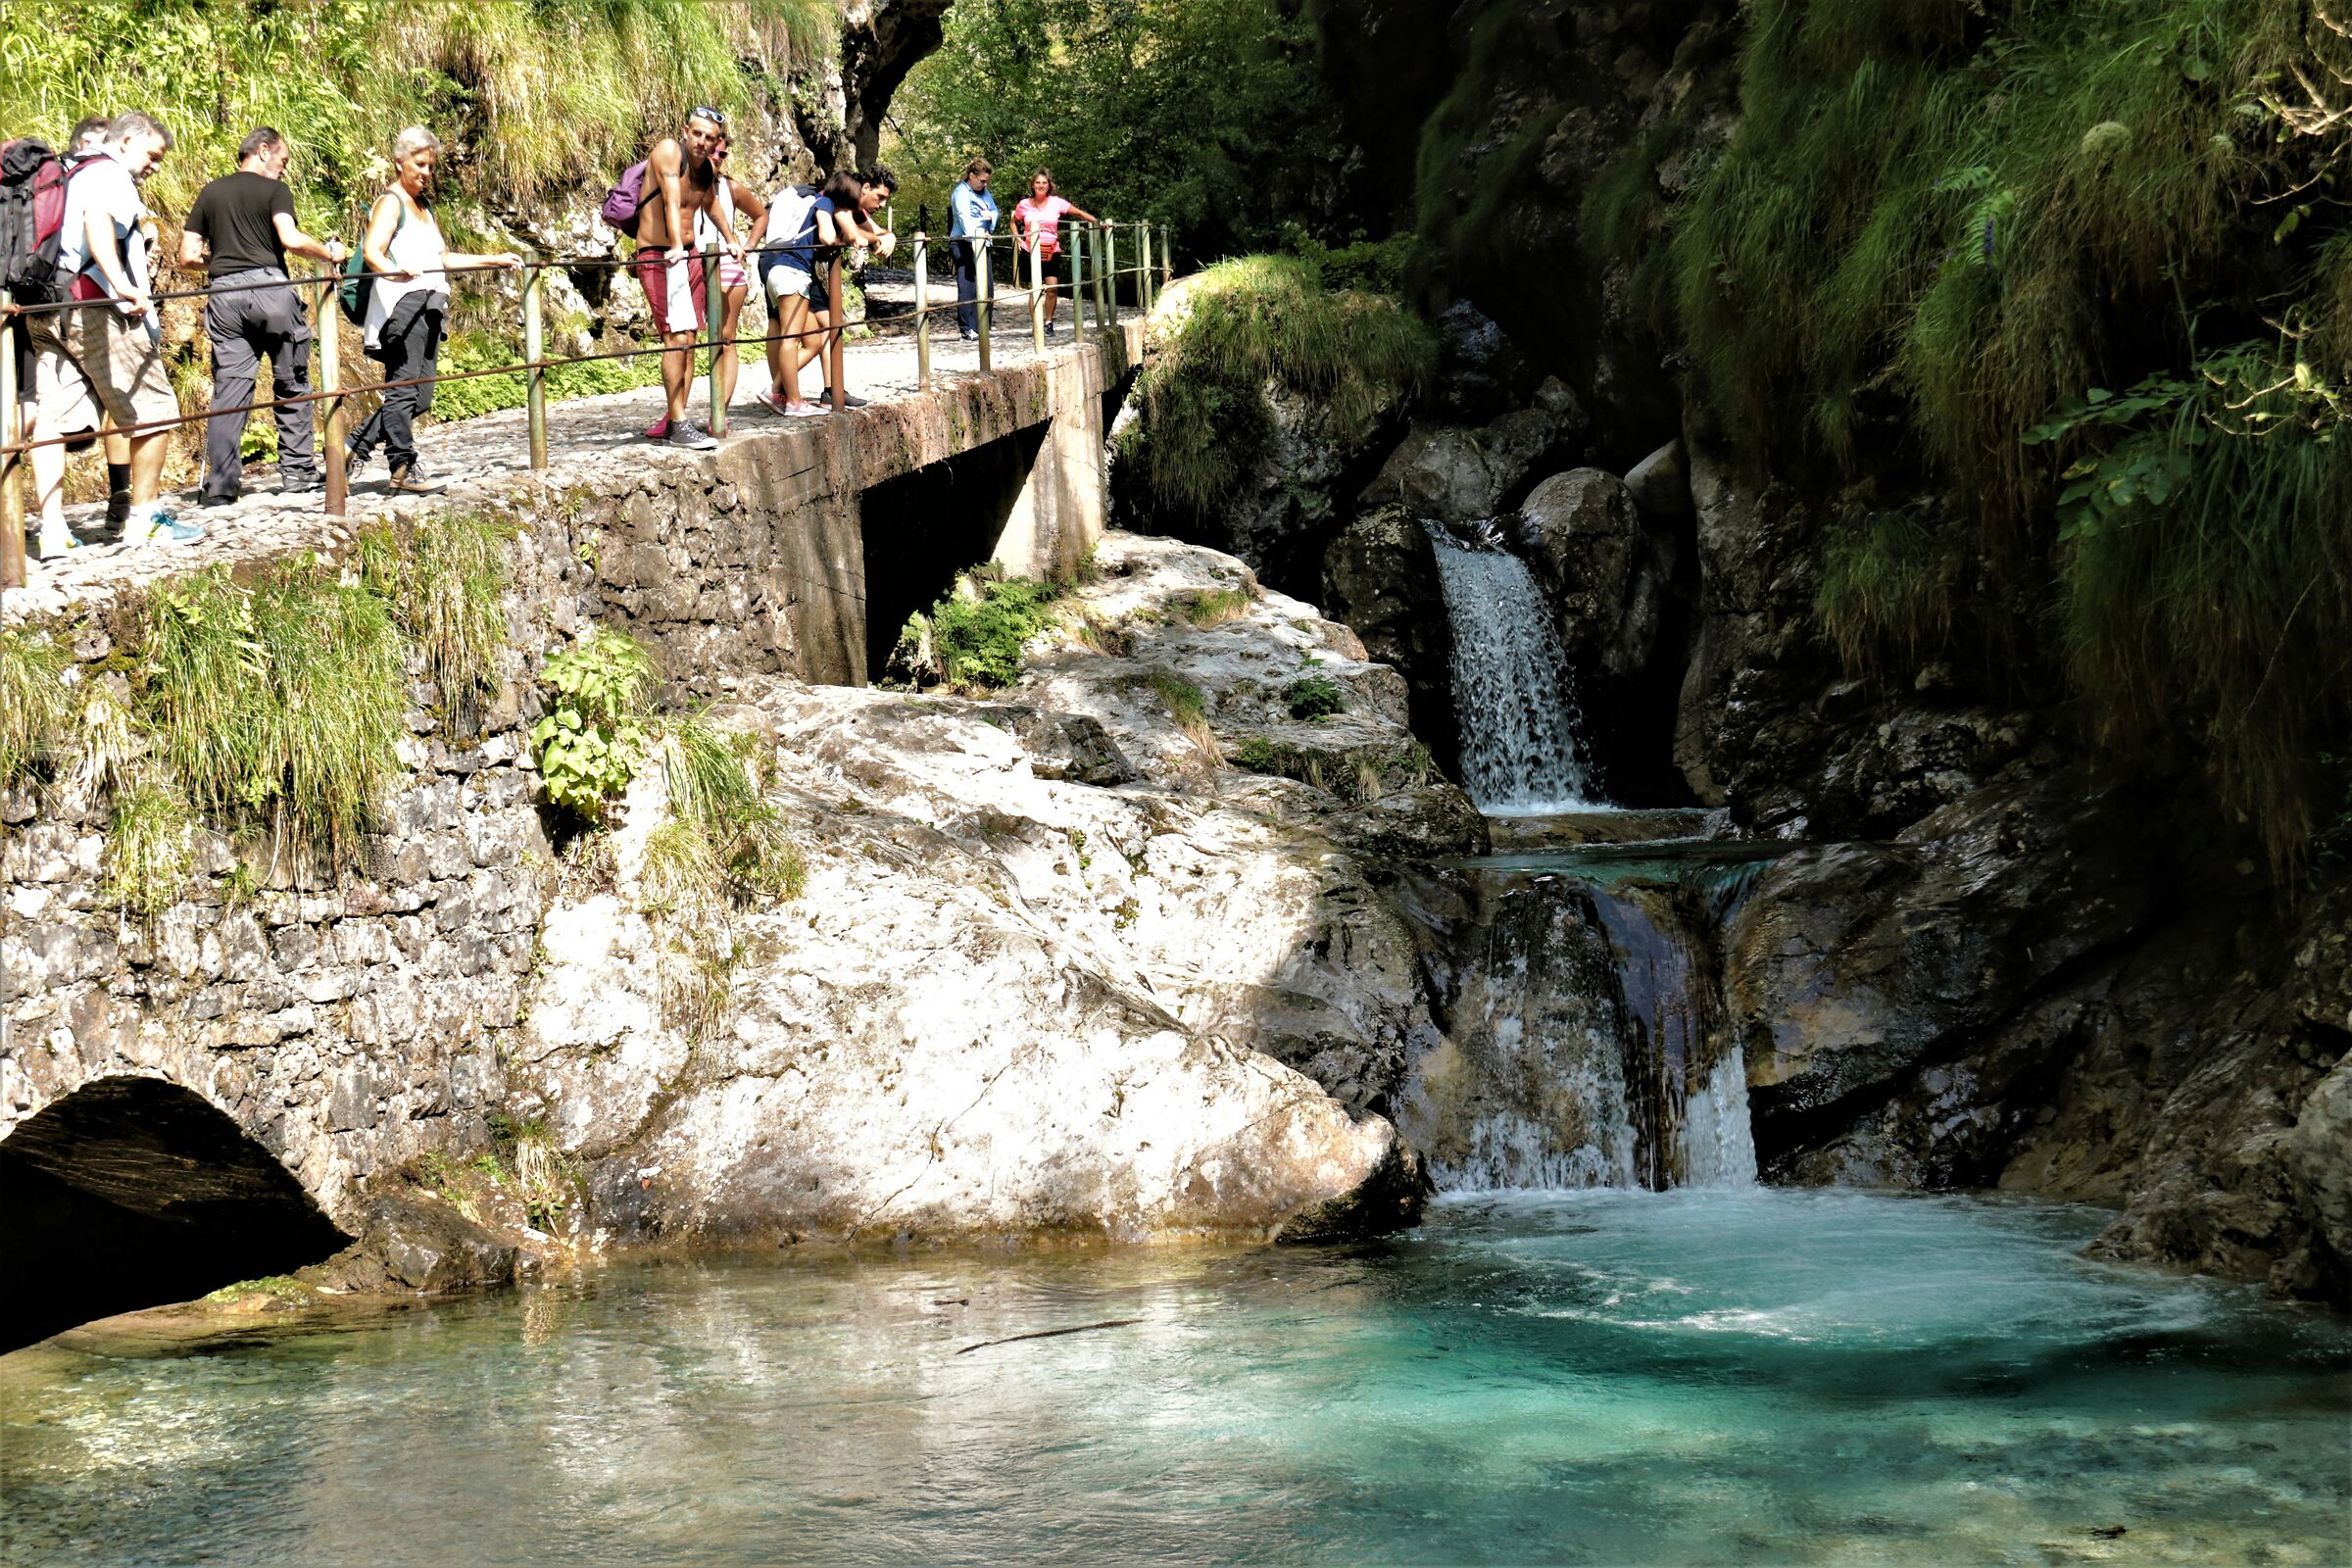 The Waterfalls of the Vertova Valley ...